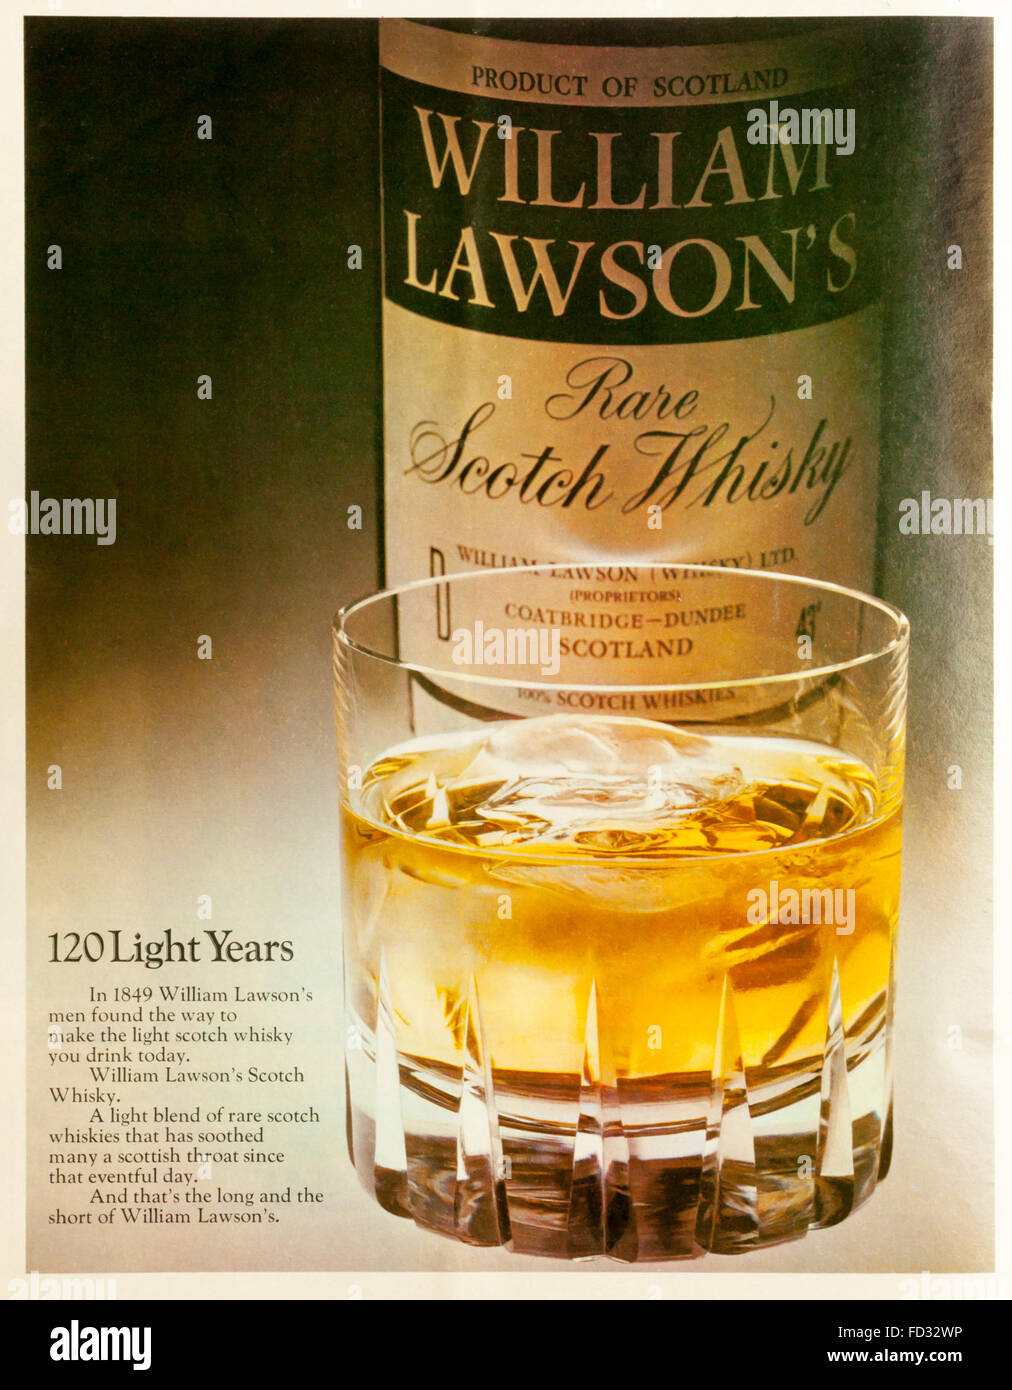 1970s advert advertising William Lawson's Rare Scotch Whisky. Stock Photo